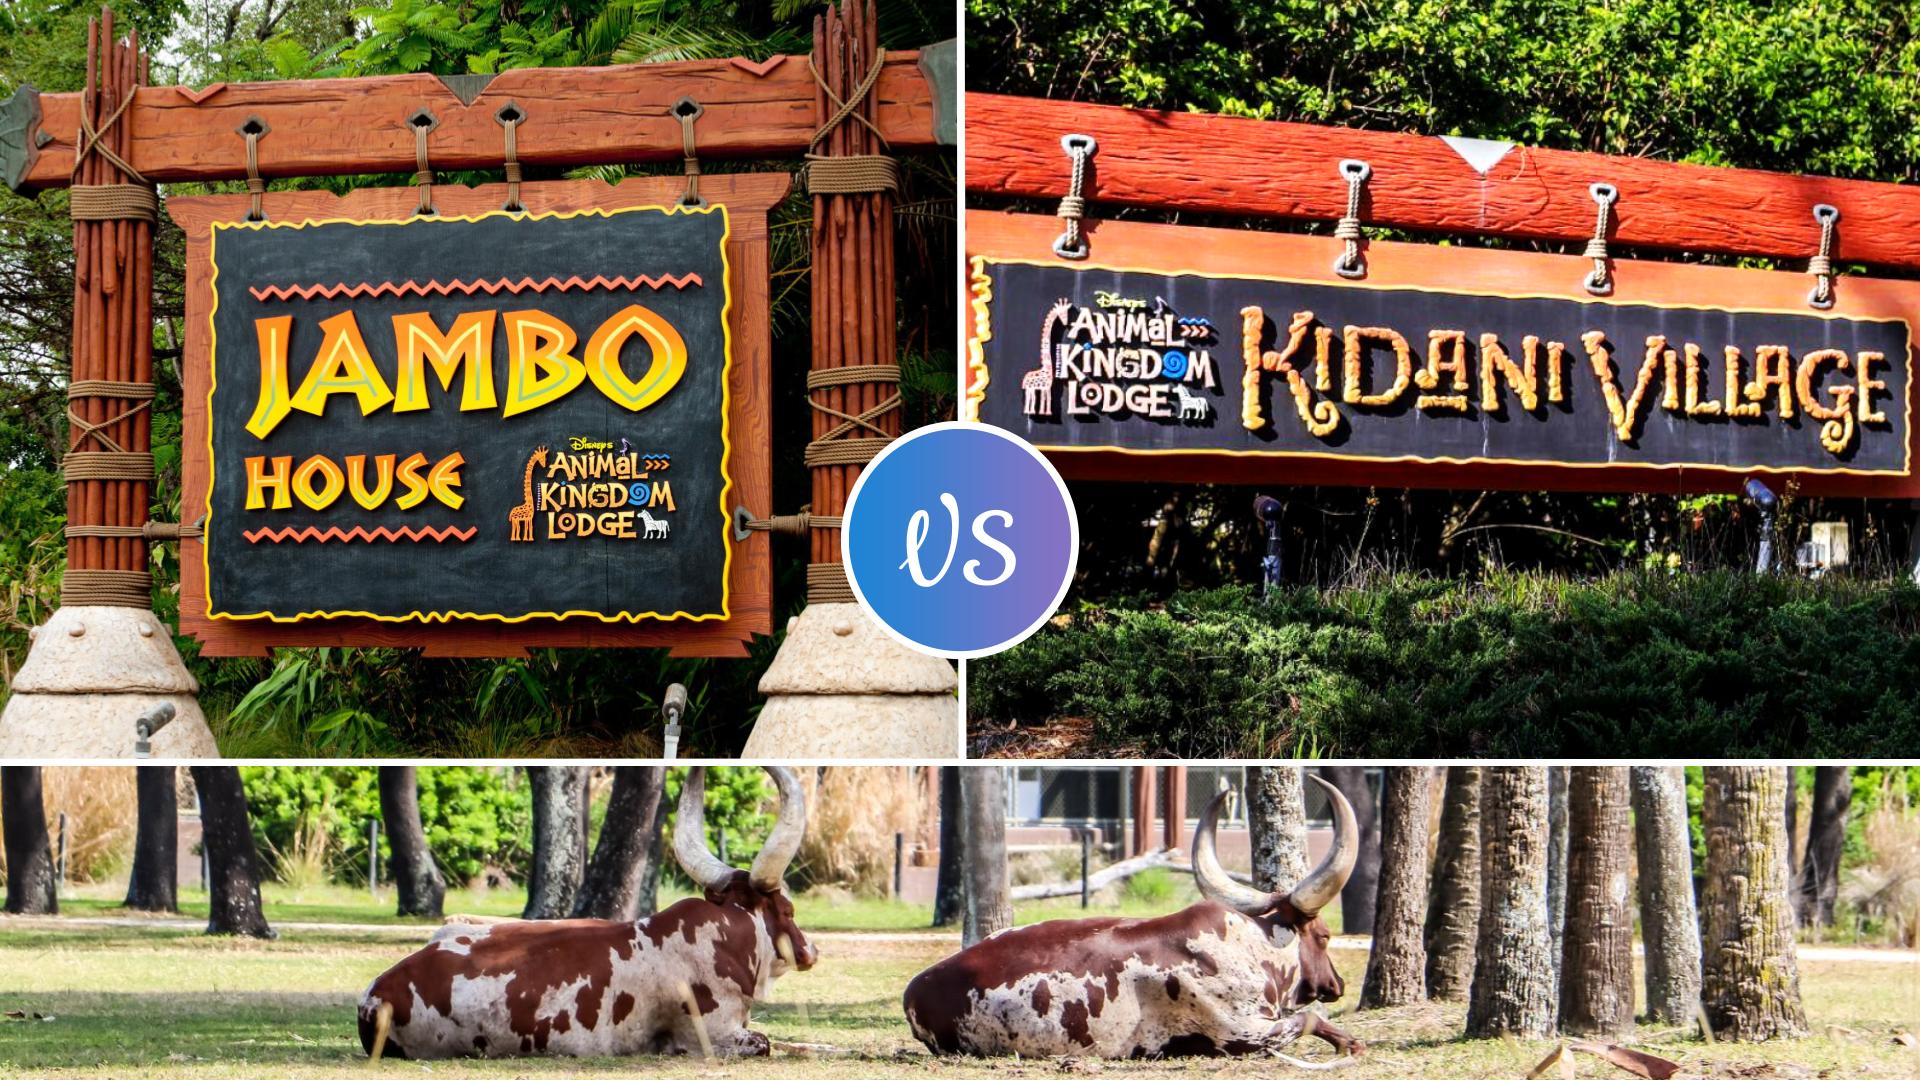 Jambo House vs. Kidani Village